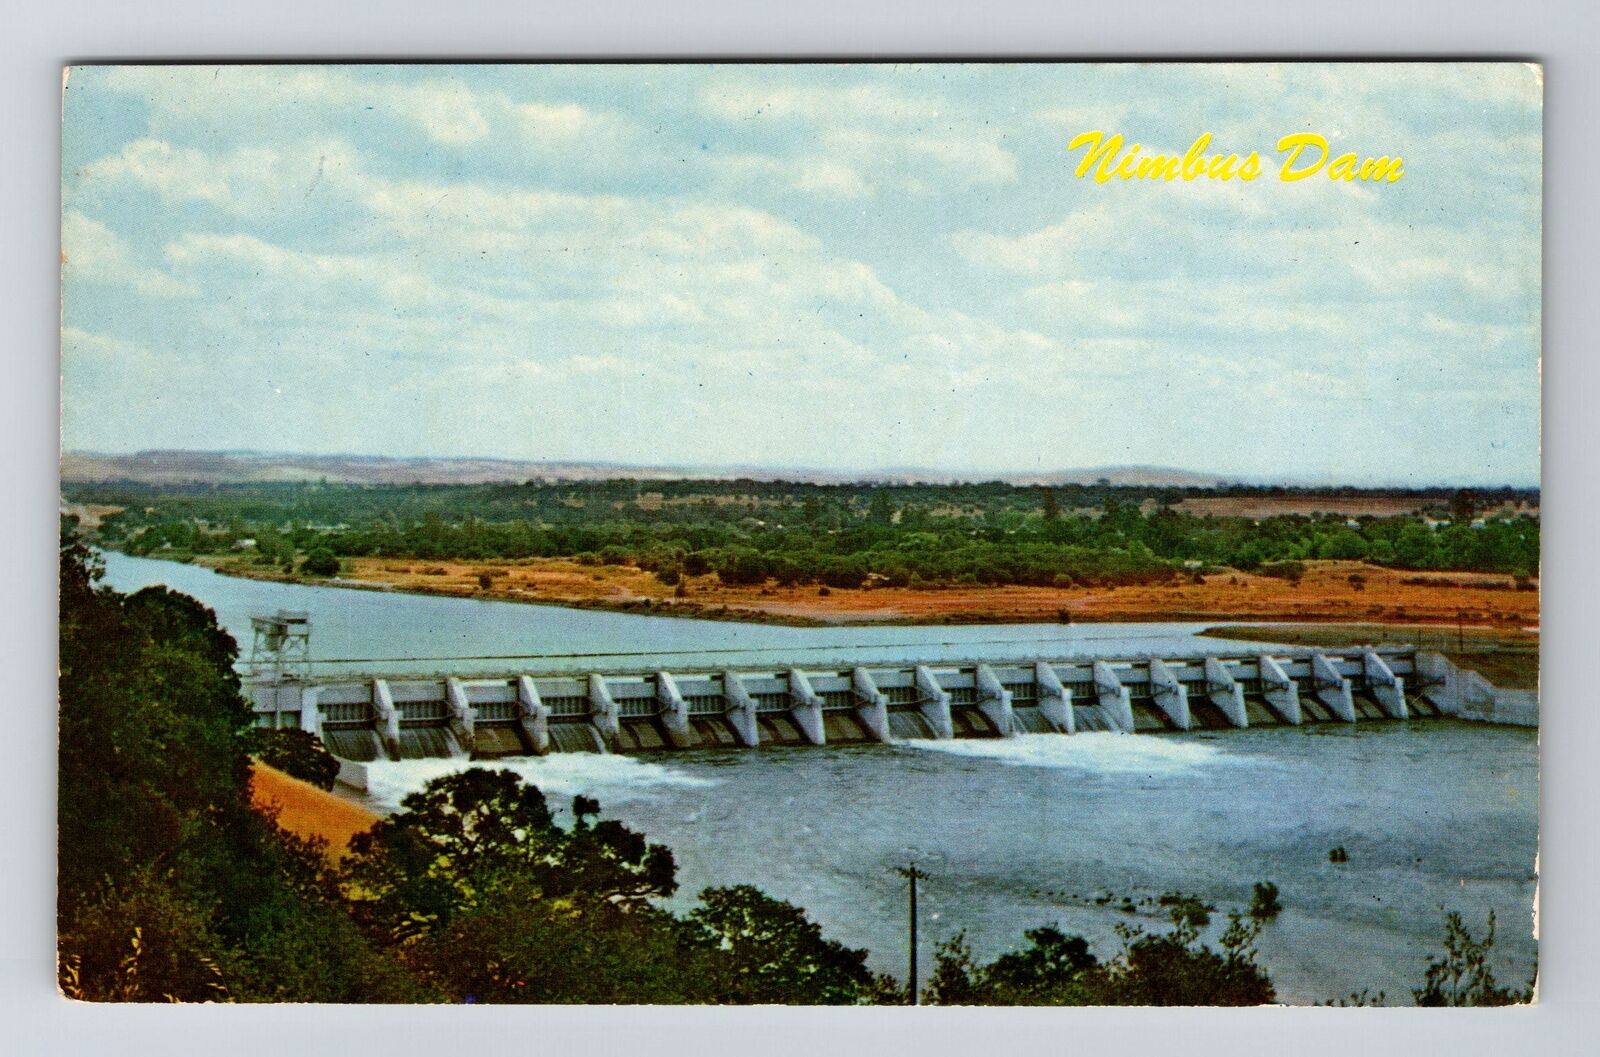 Nimbus Dam CA-California Scenic View Dam with Forest c1967 Vintage Postcard